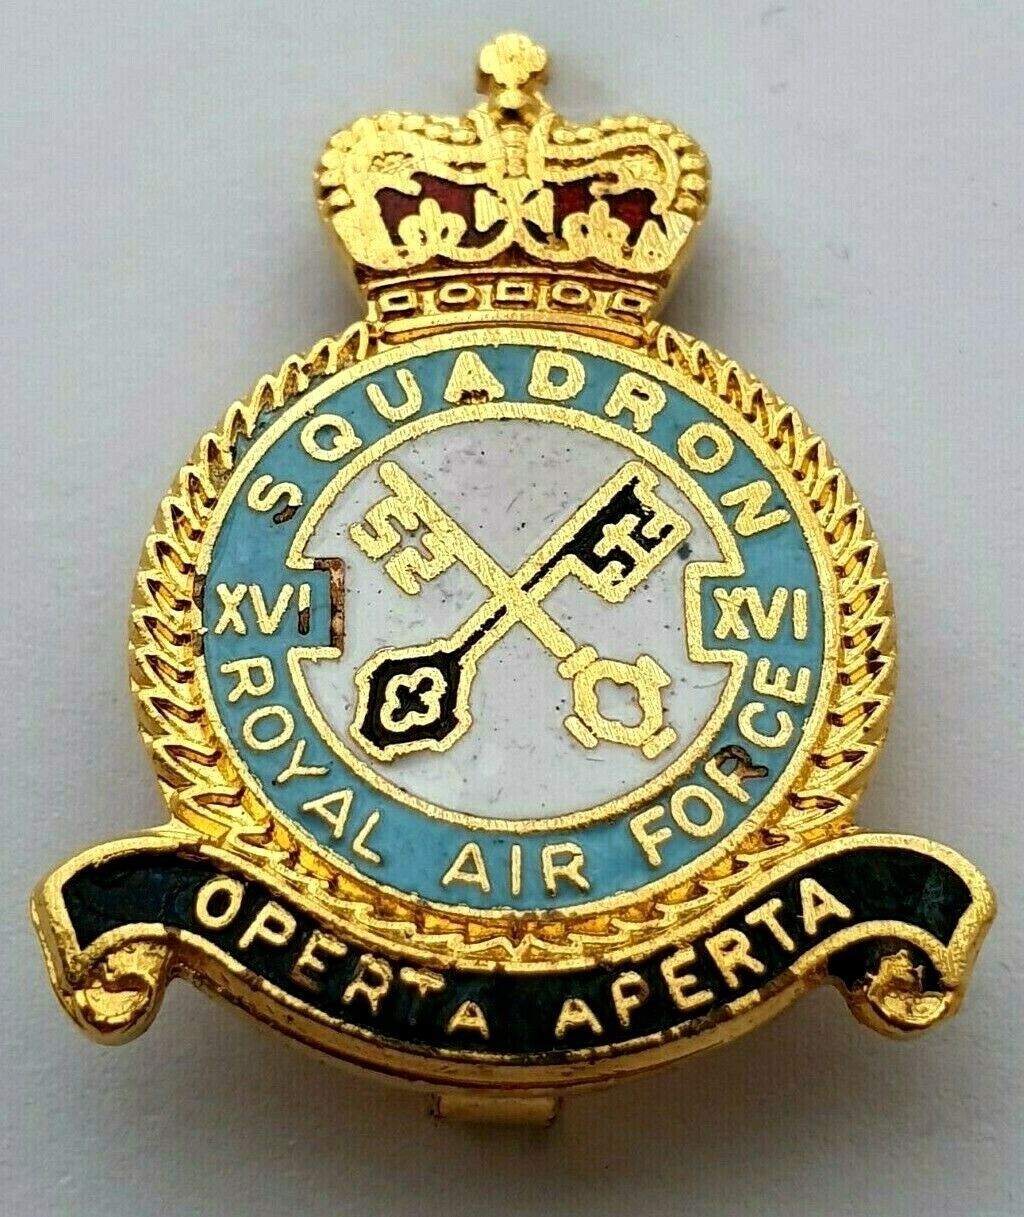  RAF Royal Air Force Enamel Badge 16 Squadron  The Hidden is Revealed British QC